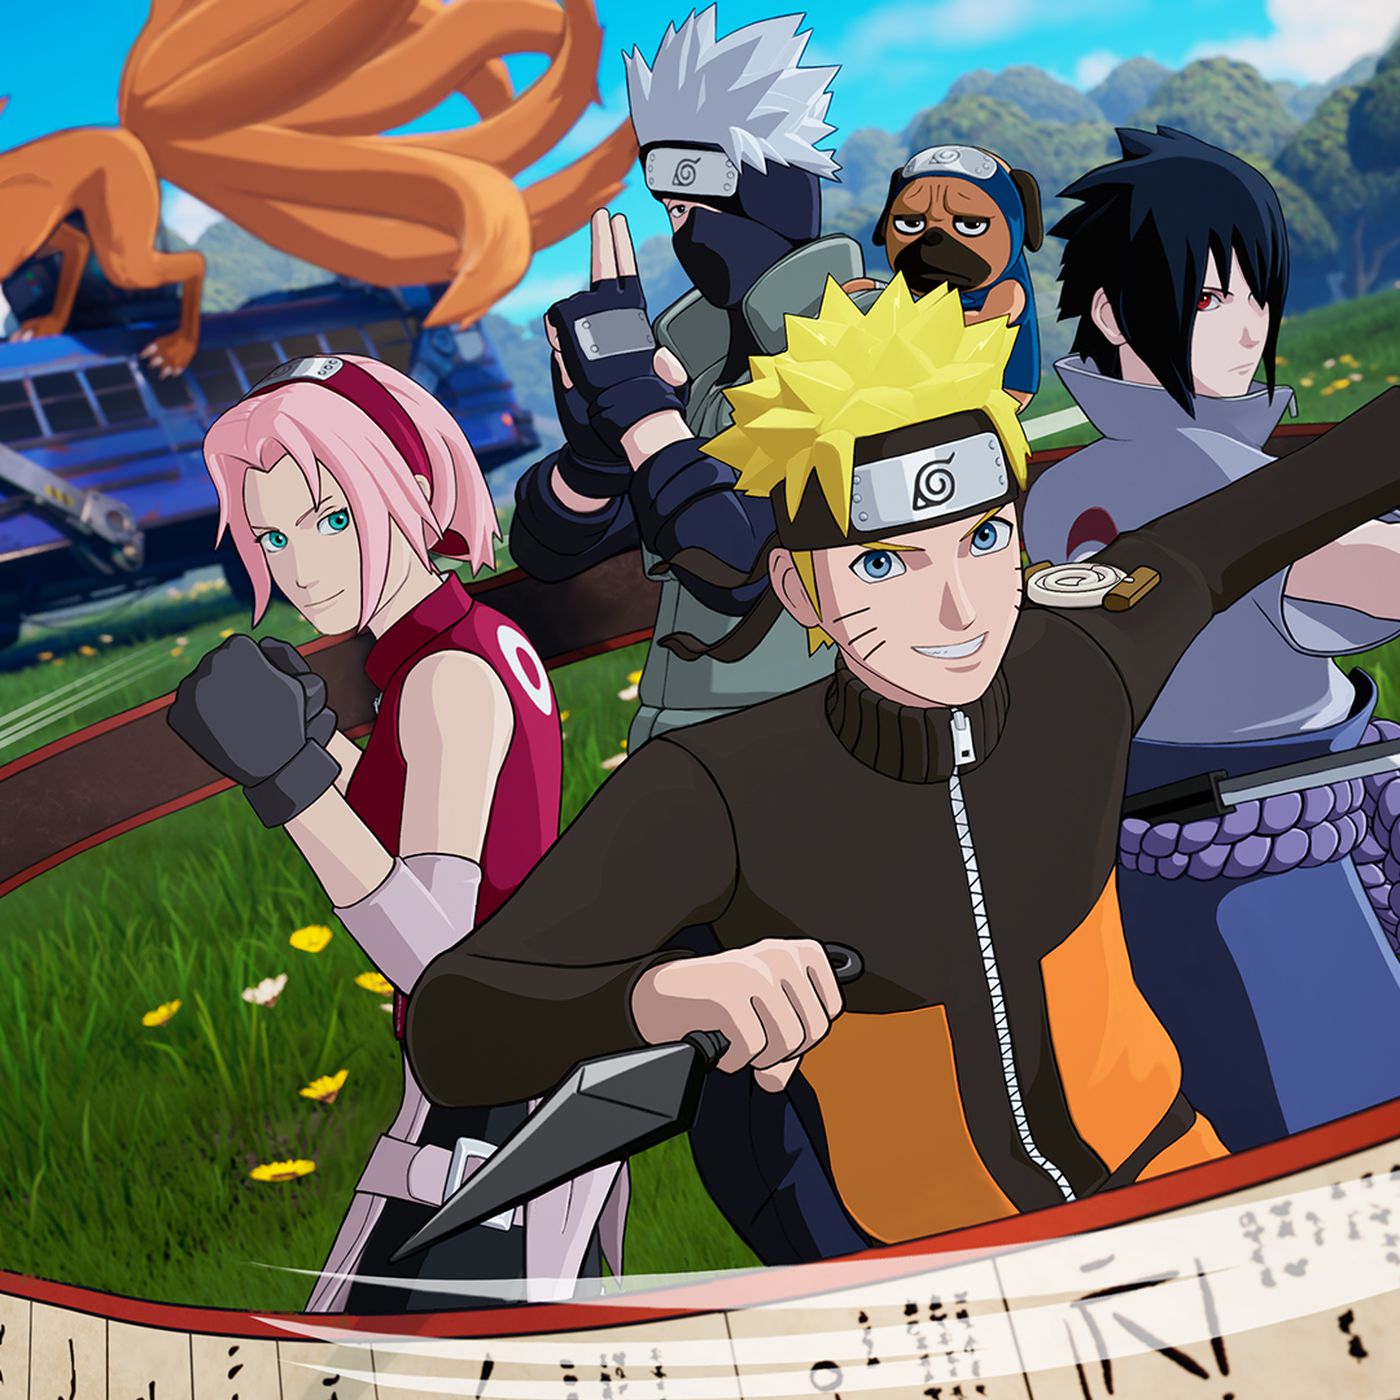 Fortnite's Naruto skin is here along with Sasuke, Sakura, and Kakashi